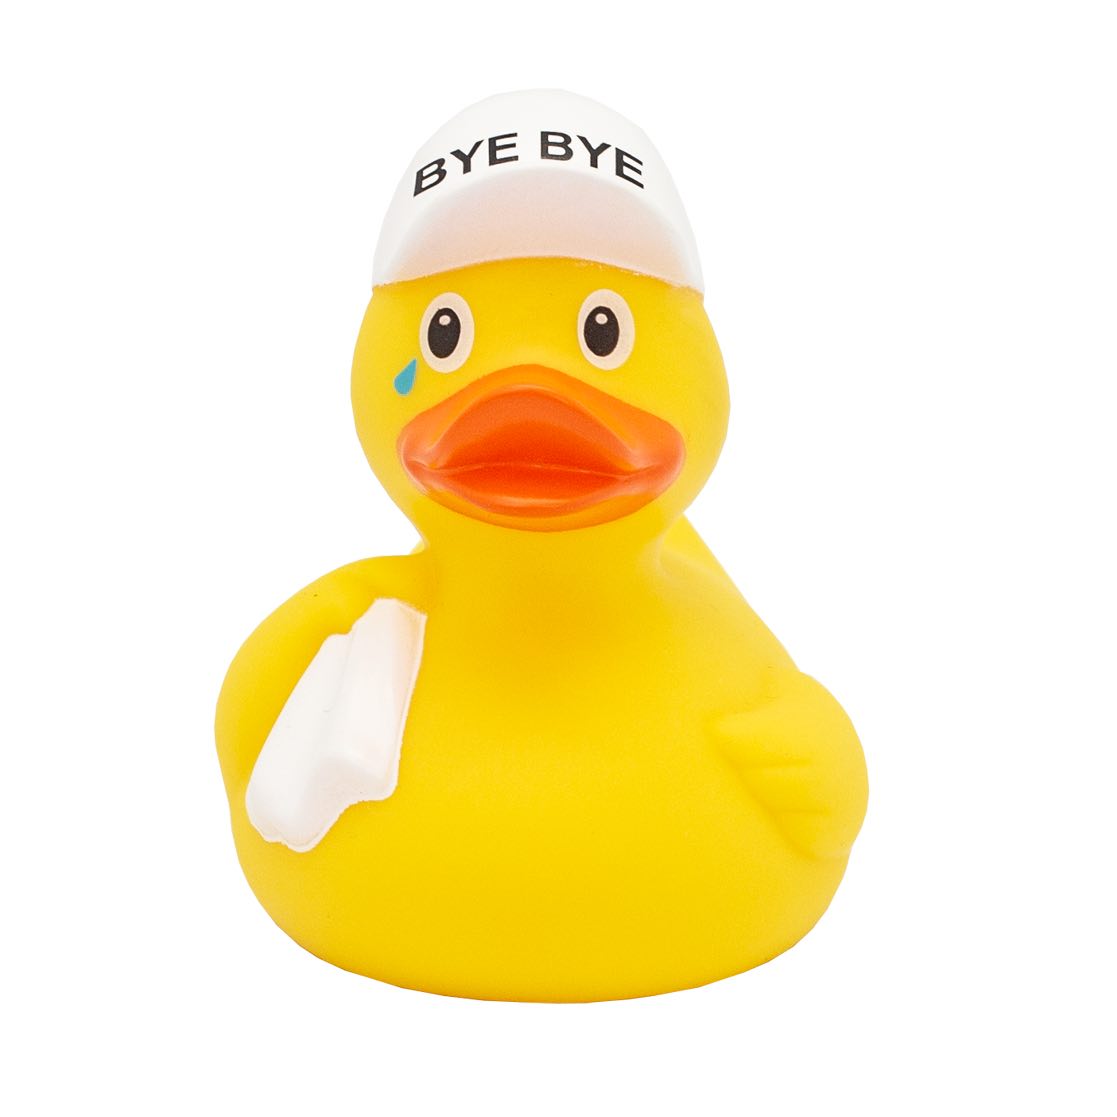 Bye Bye Rubber Duck  Buy premium rubber ducks online - world wide delivery!